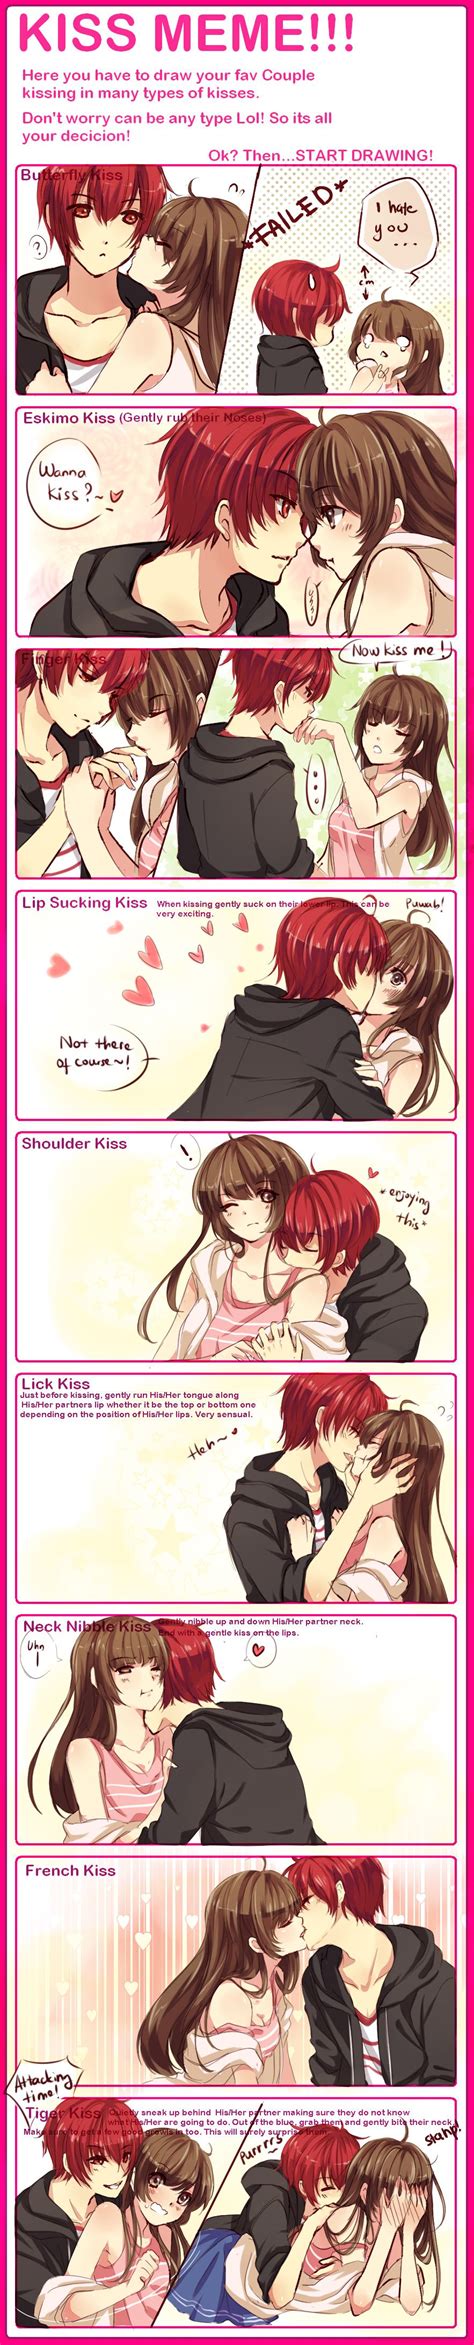 Kiss Meme With Husbuuu By Hachiimi On Deviantart Manga Couples Couple Manga Anime Couple Kiss